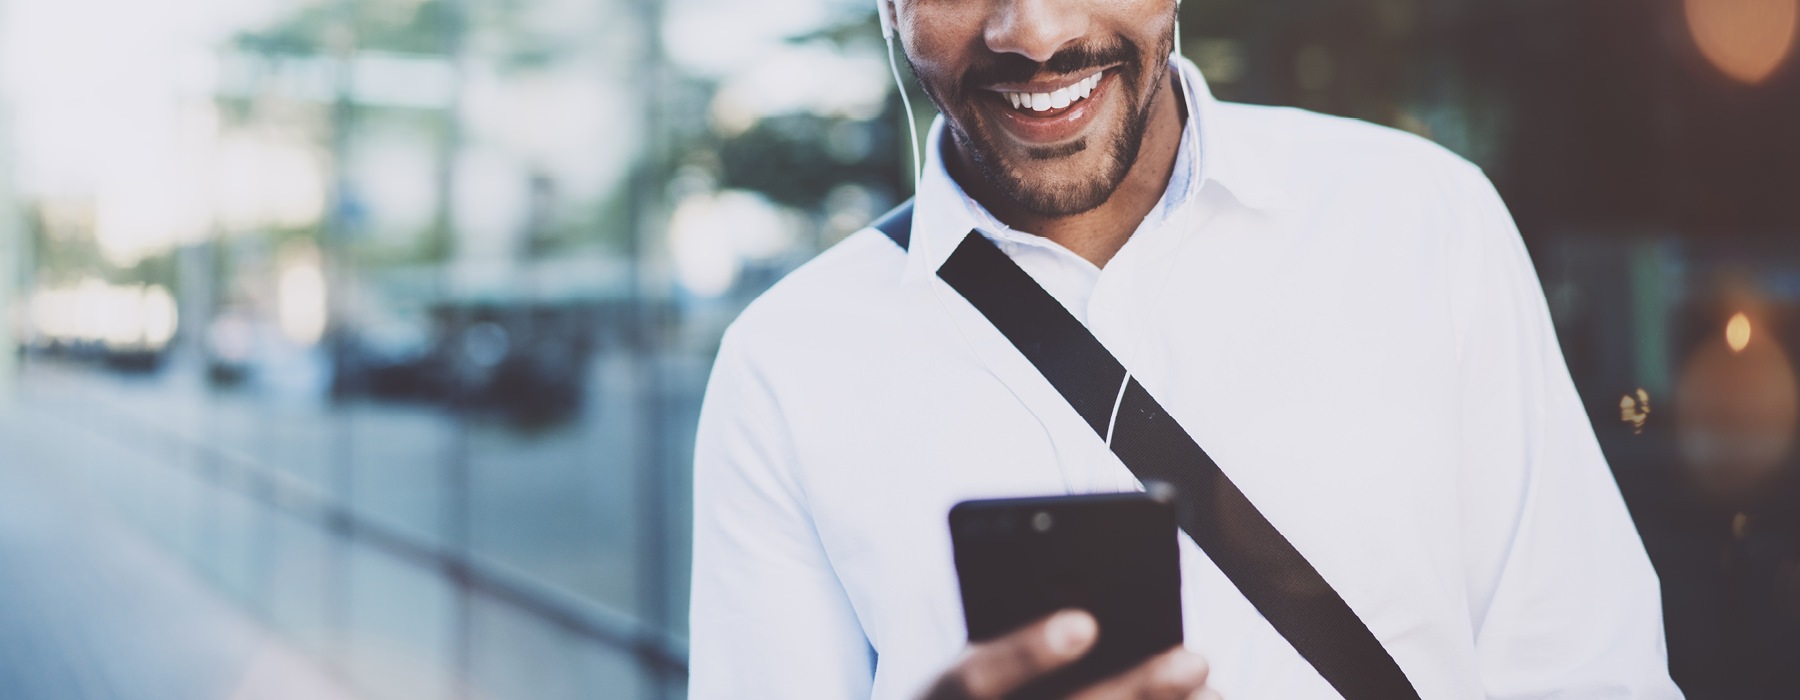 smiling man walks down city sidewalk as he looks at his phone